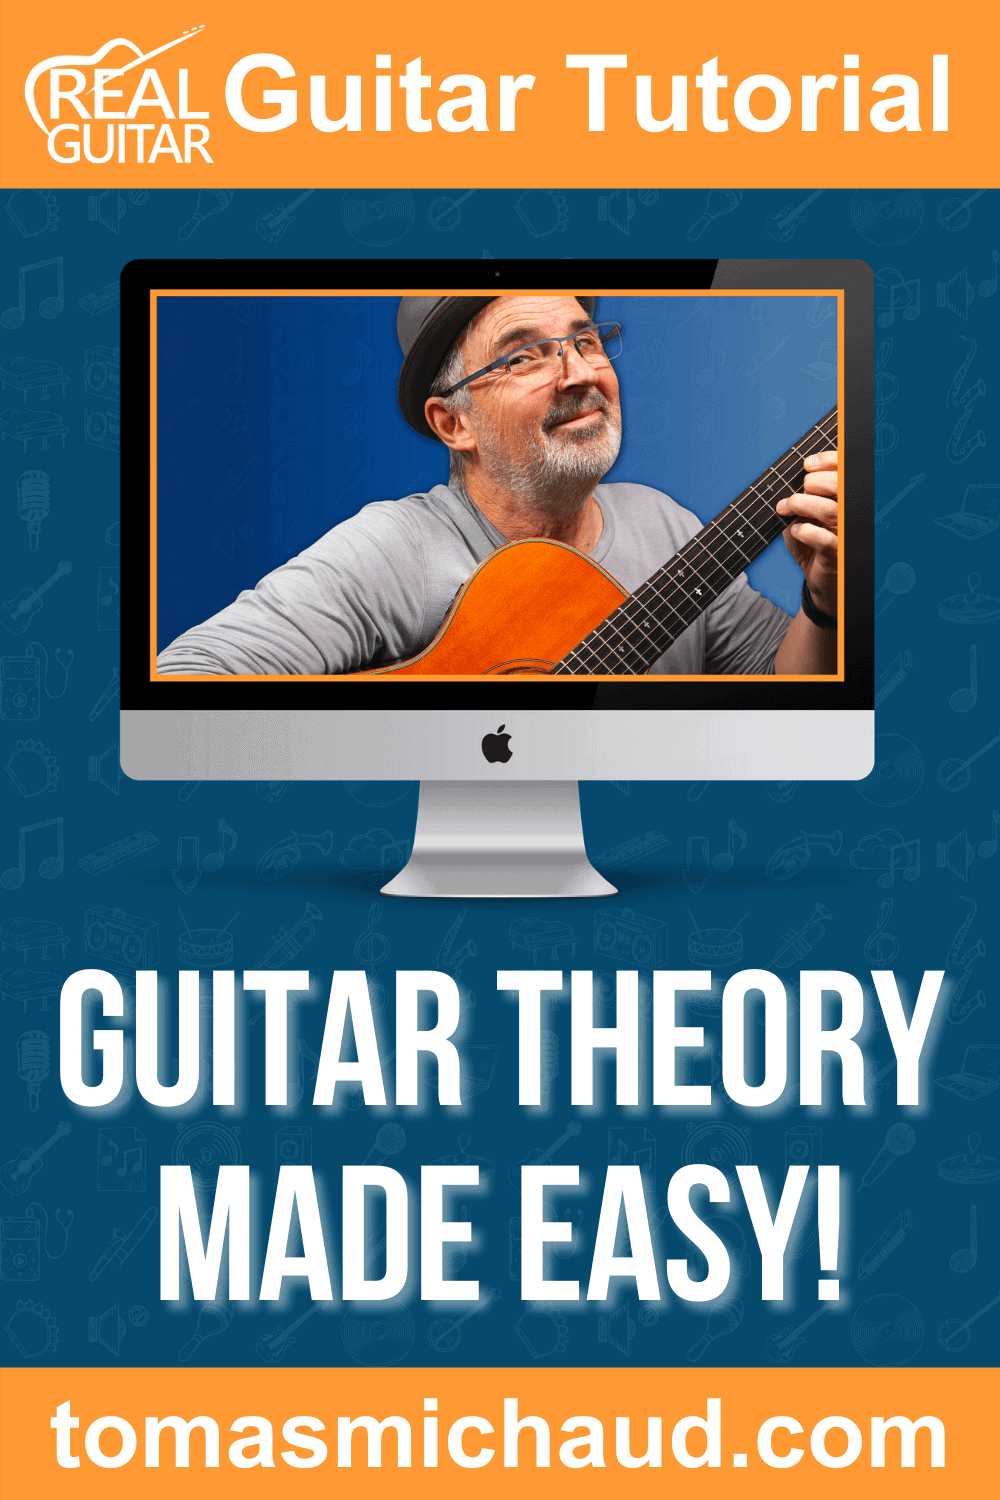 Guitar Theory Made Easy!